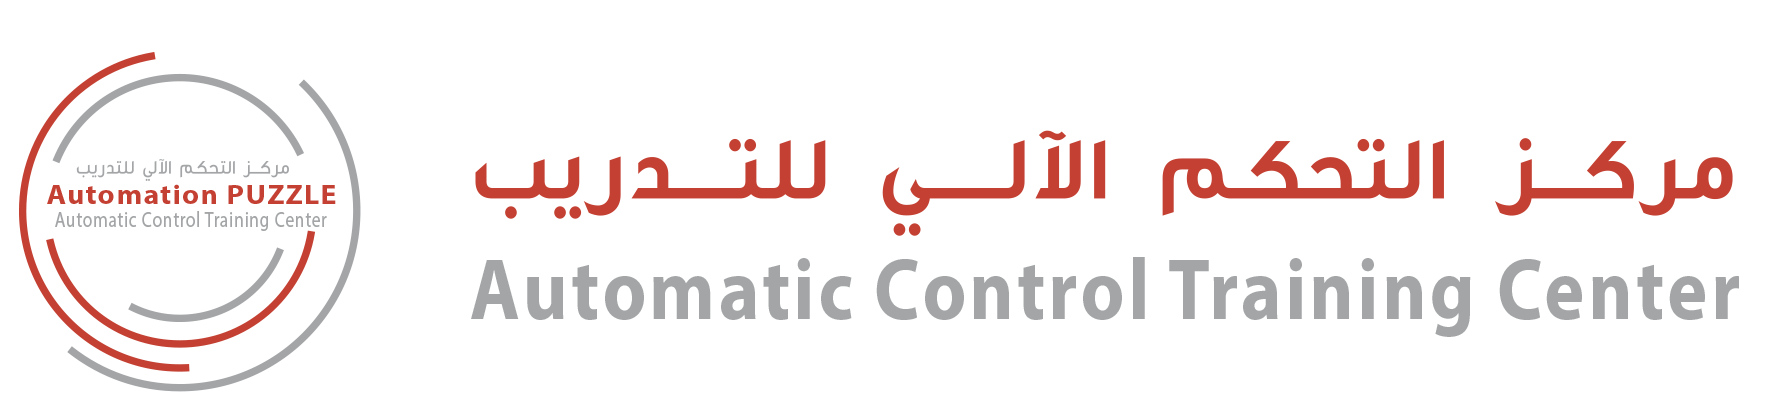 Automatic Control Training Center 